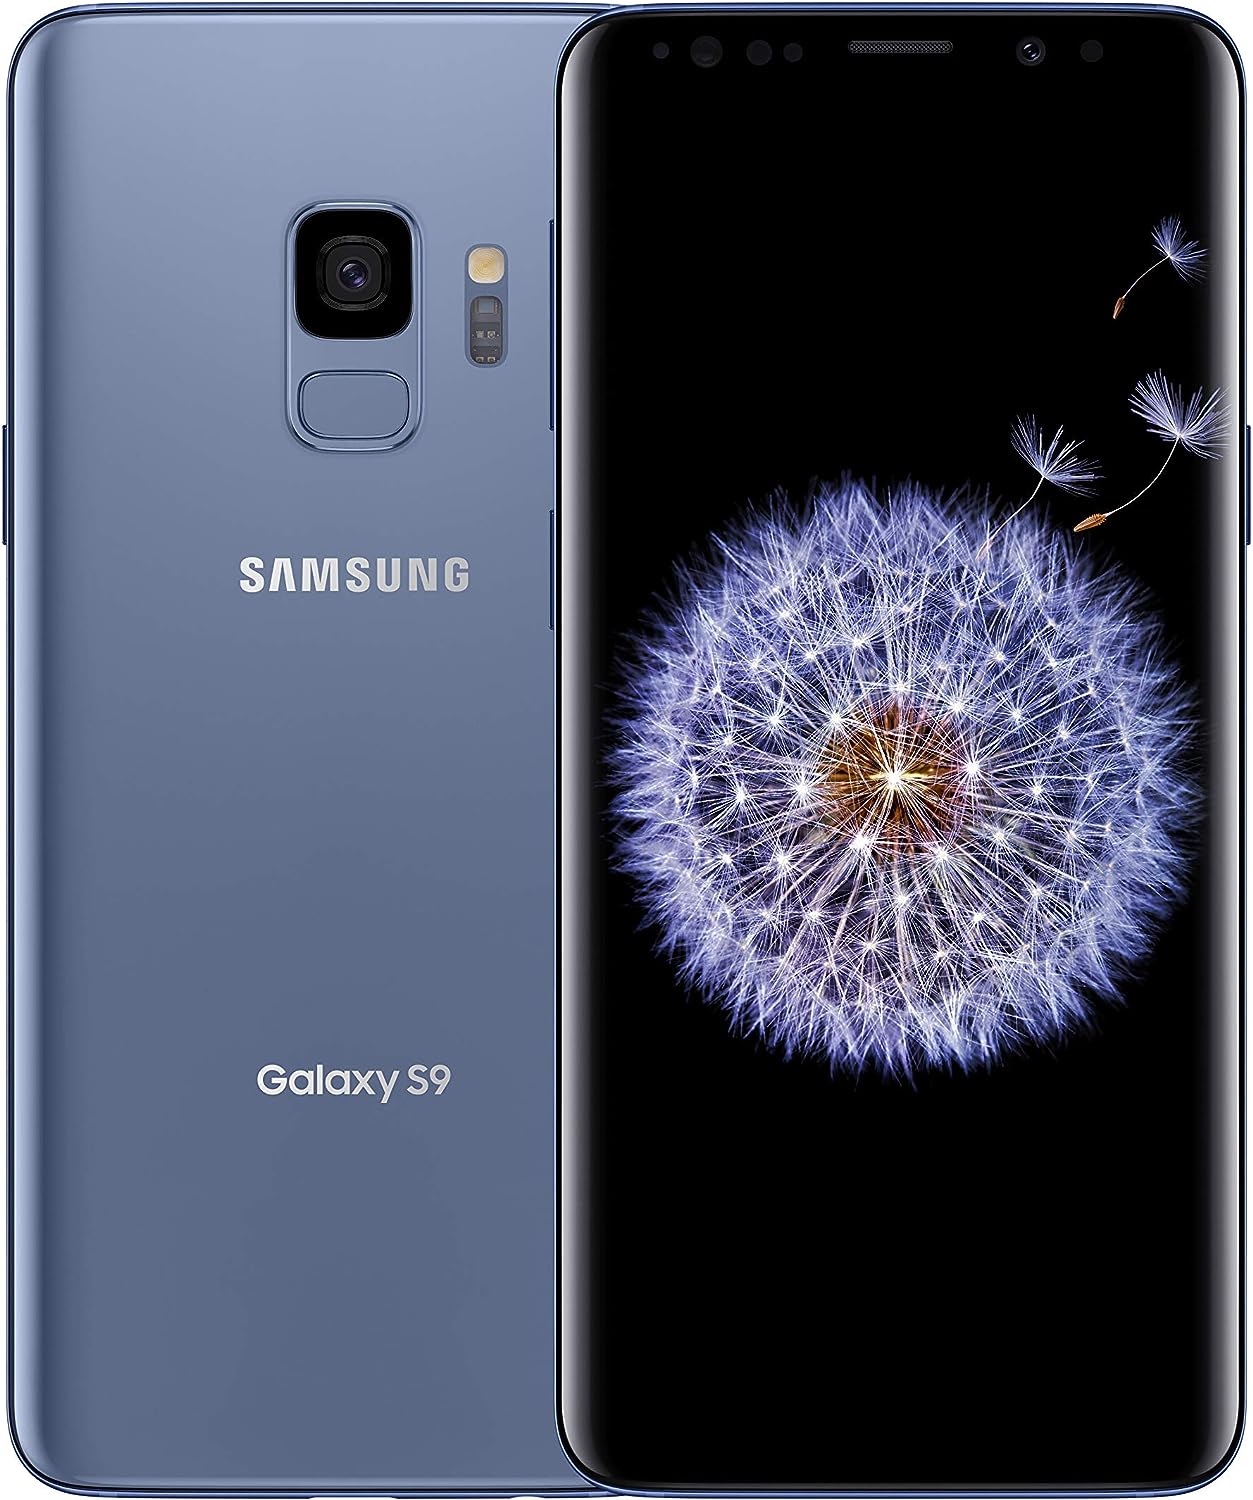 SAMSUNG Galaxy S9+ Factory Unlocked Smartphone 64GB – Lilac Purple – US Version [SM-G965UZPAXAA]